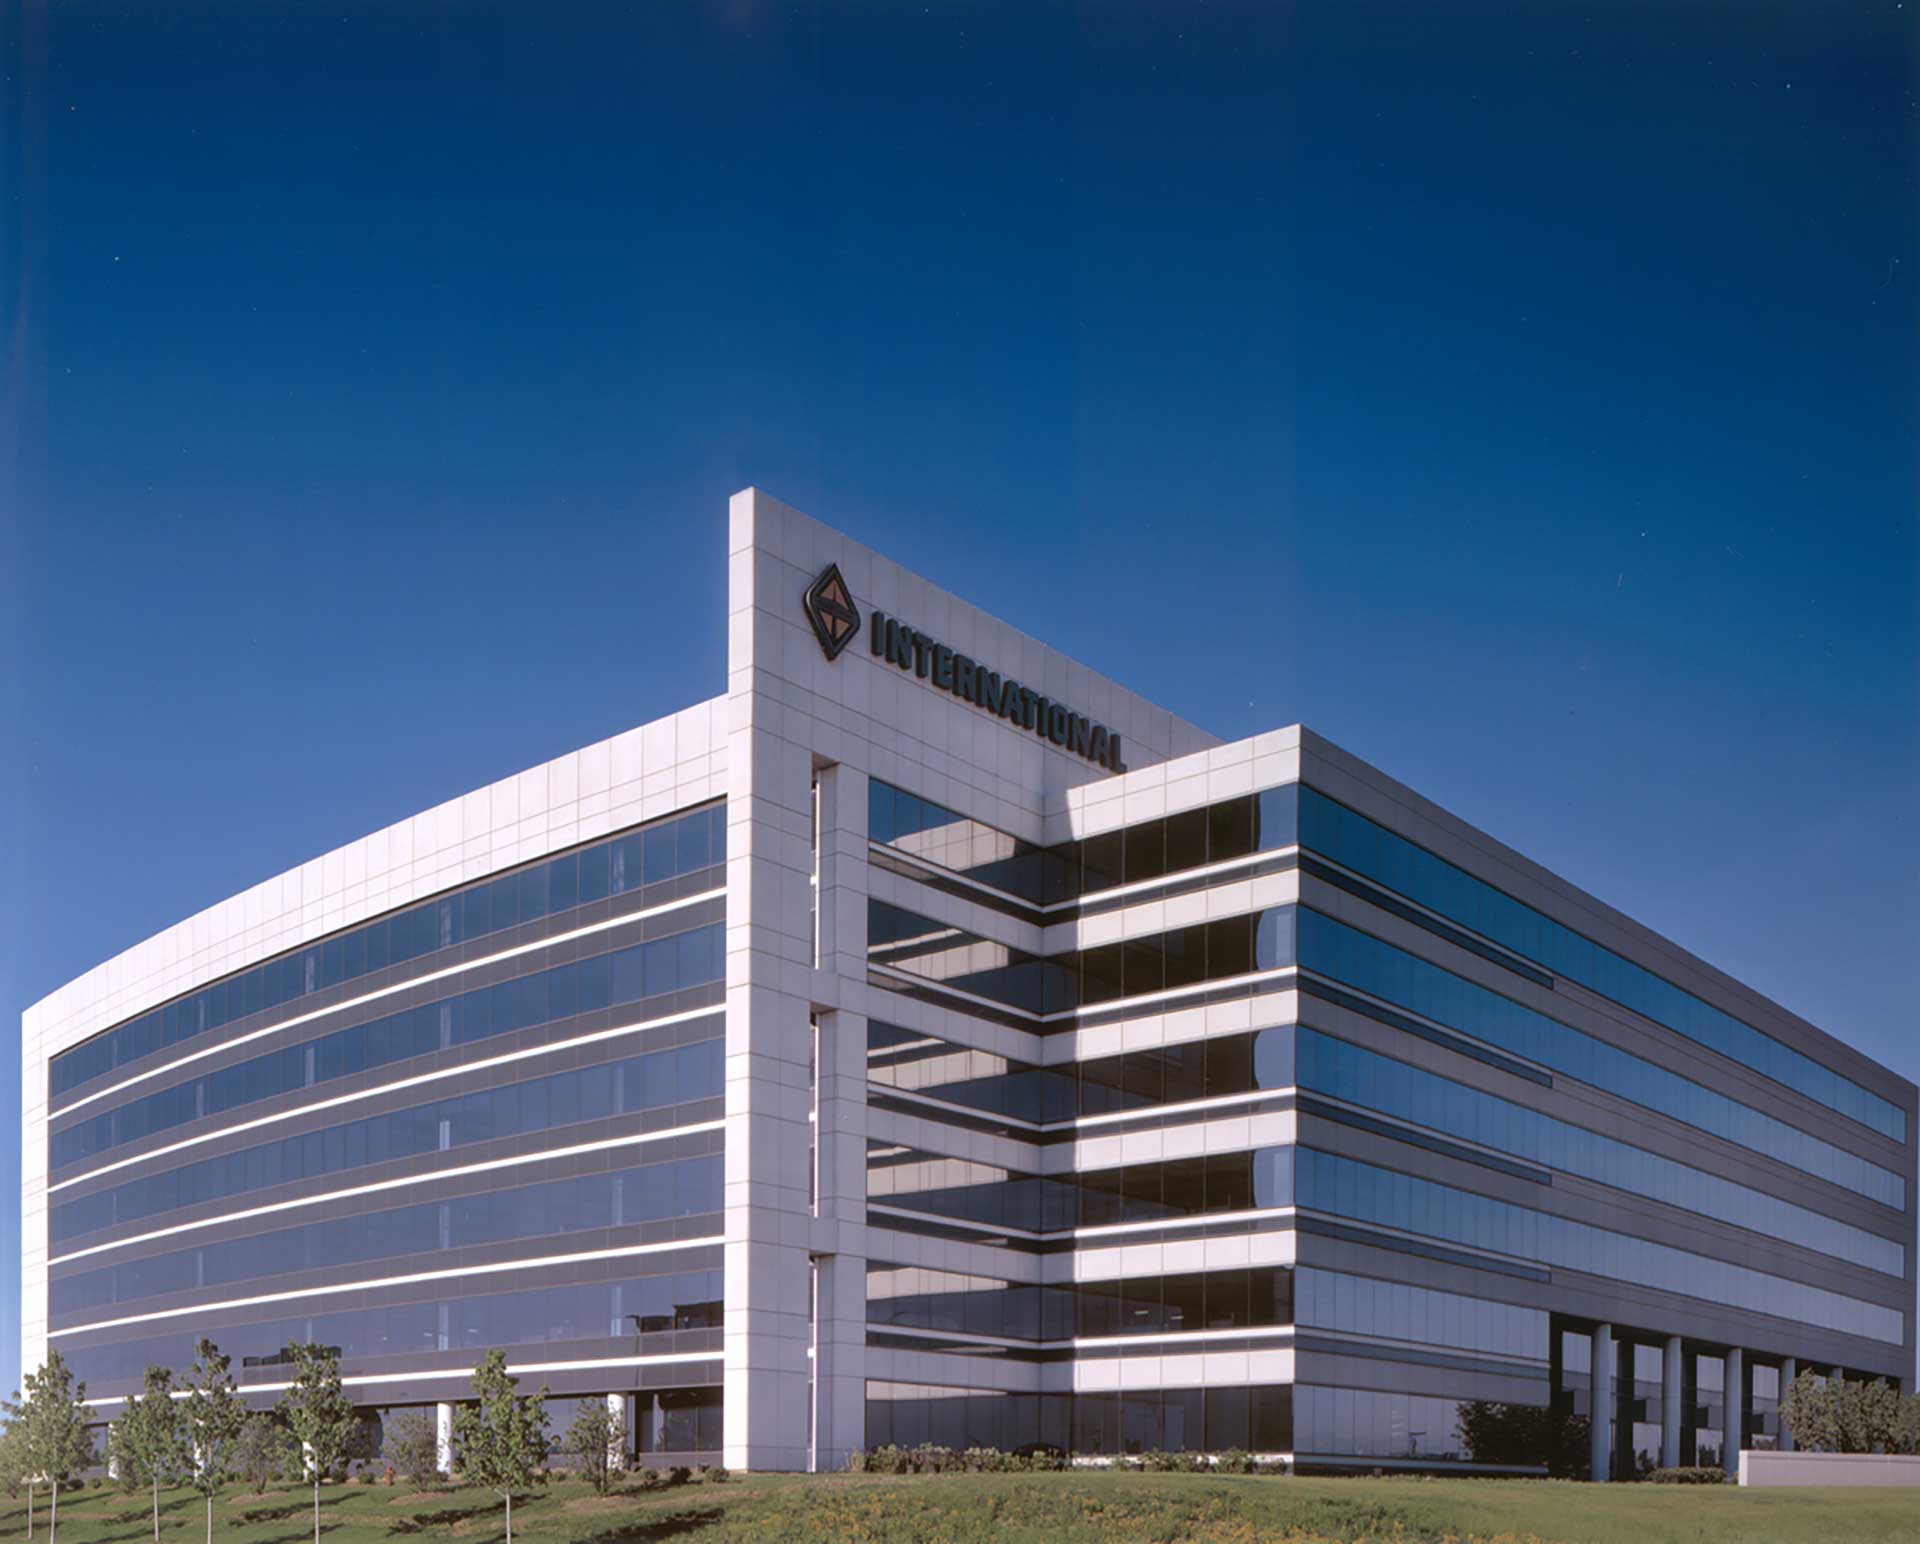 International Truck & Engine headquarters in Warrenville, Illinois